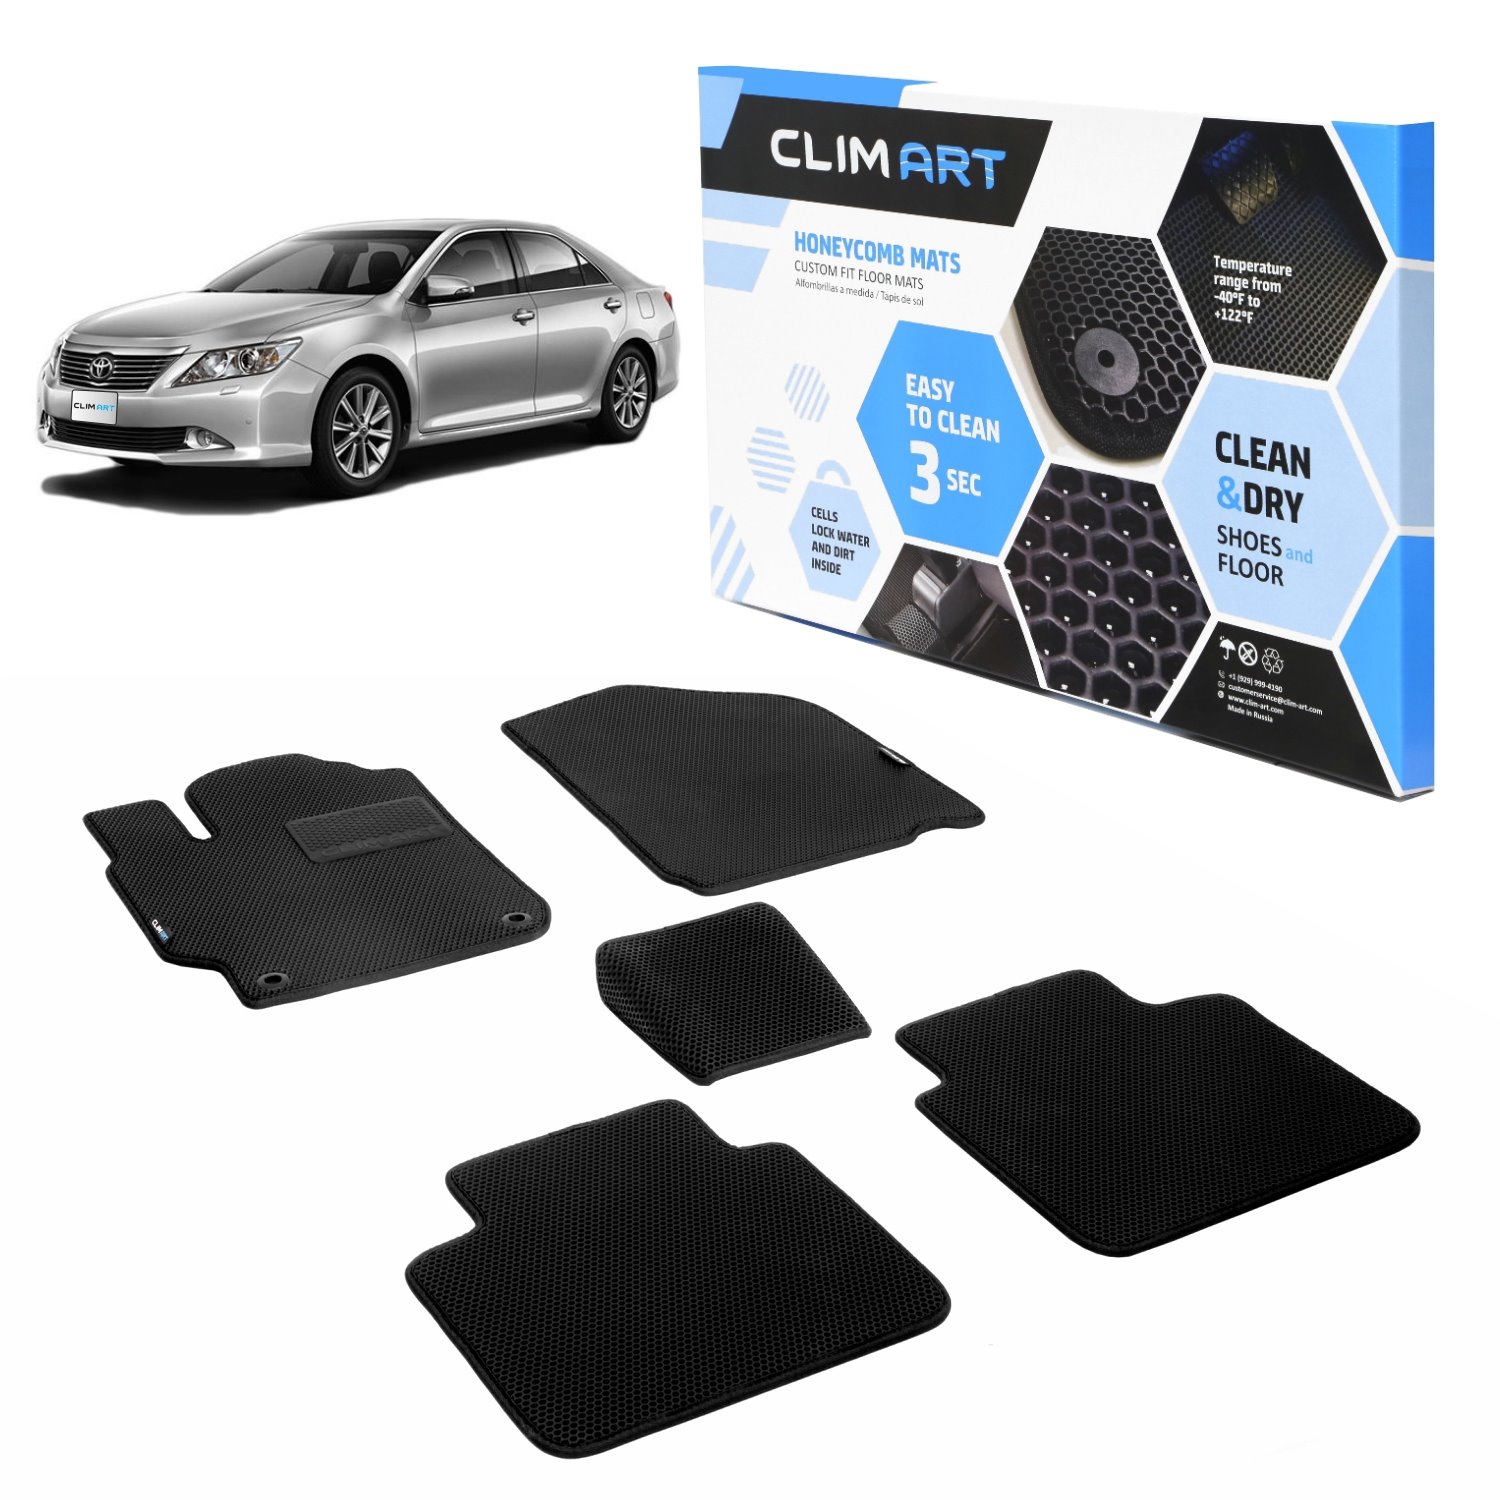 CLIM ART Honeycomb Custom Fit Floor Mats for 2015-2017 Toyota Camry